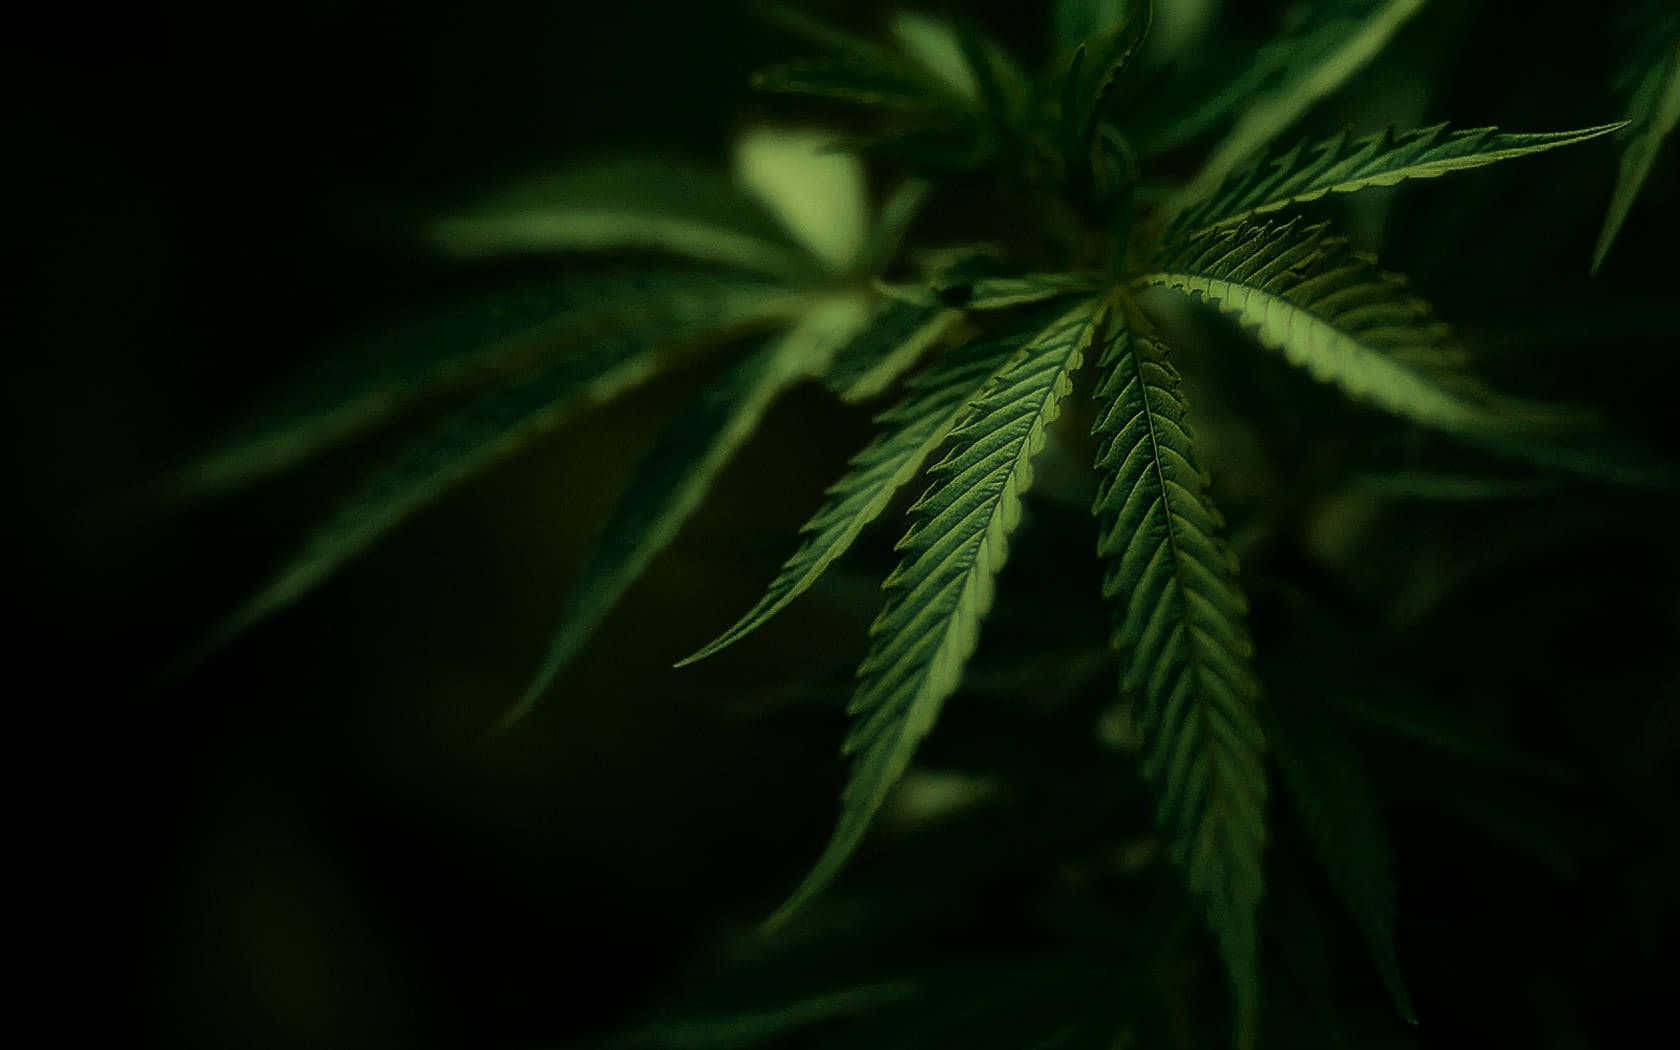 A close-up photo of a vibrant, green marijuana leaf